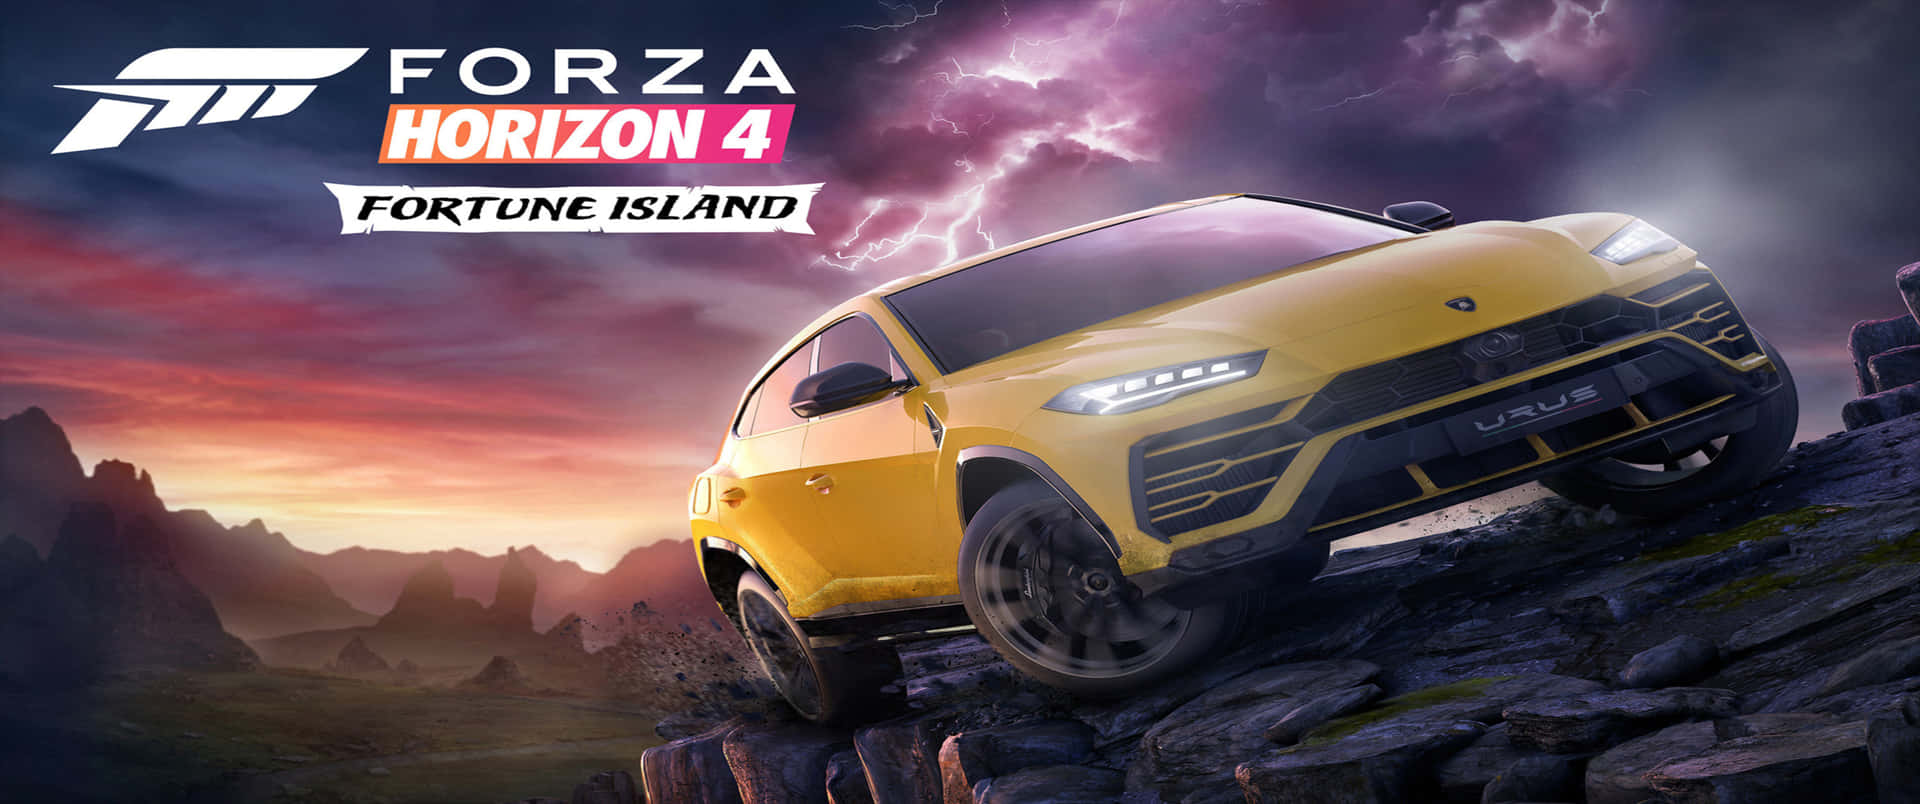 3440x1440pfortune Island Förhandsvisning Forza Horizon 4 Bakgrundsbild